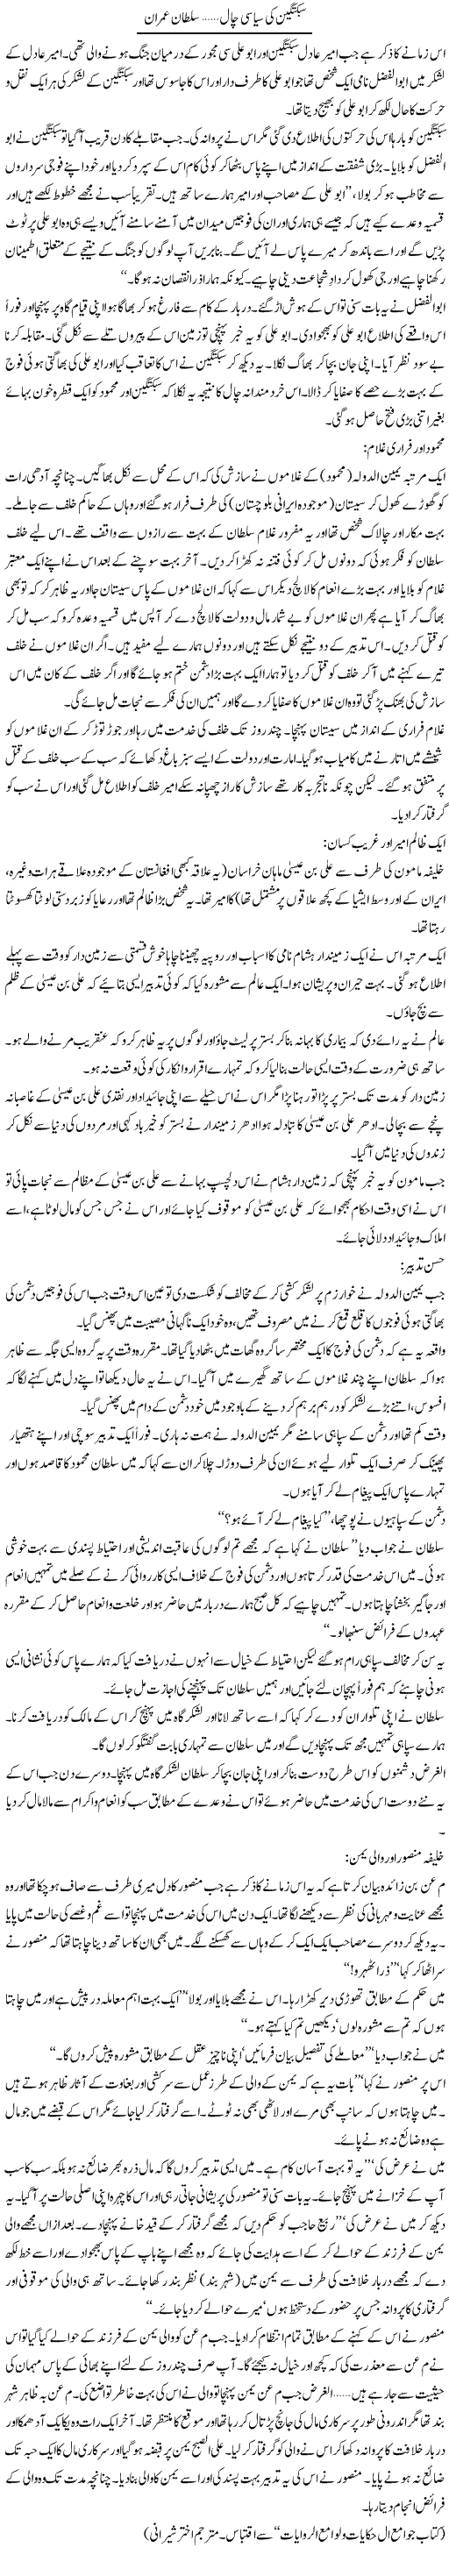 Sabugtageen Ki Siasi Chaal | Sultan Imran | Daily Urdu Columns